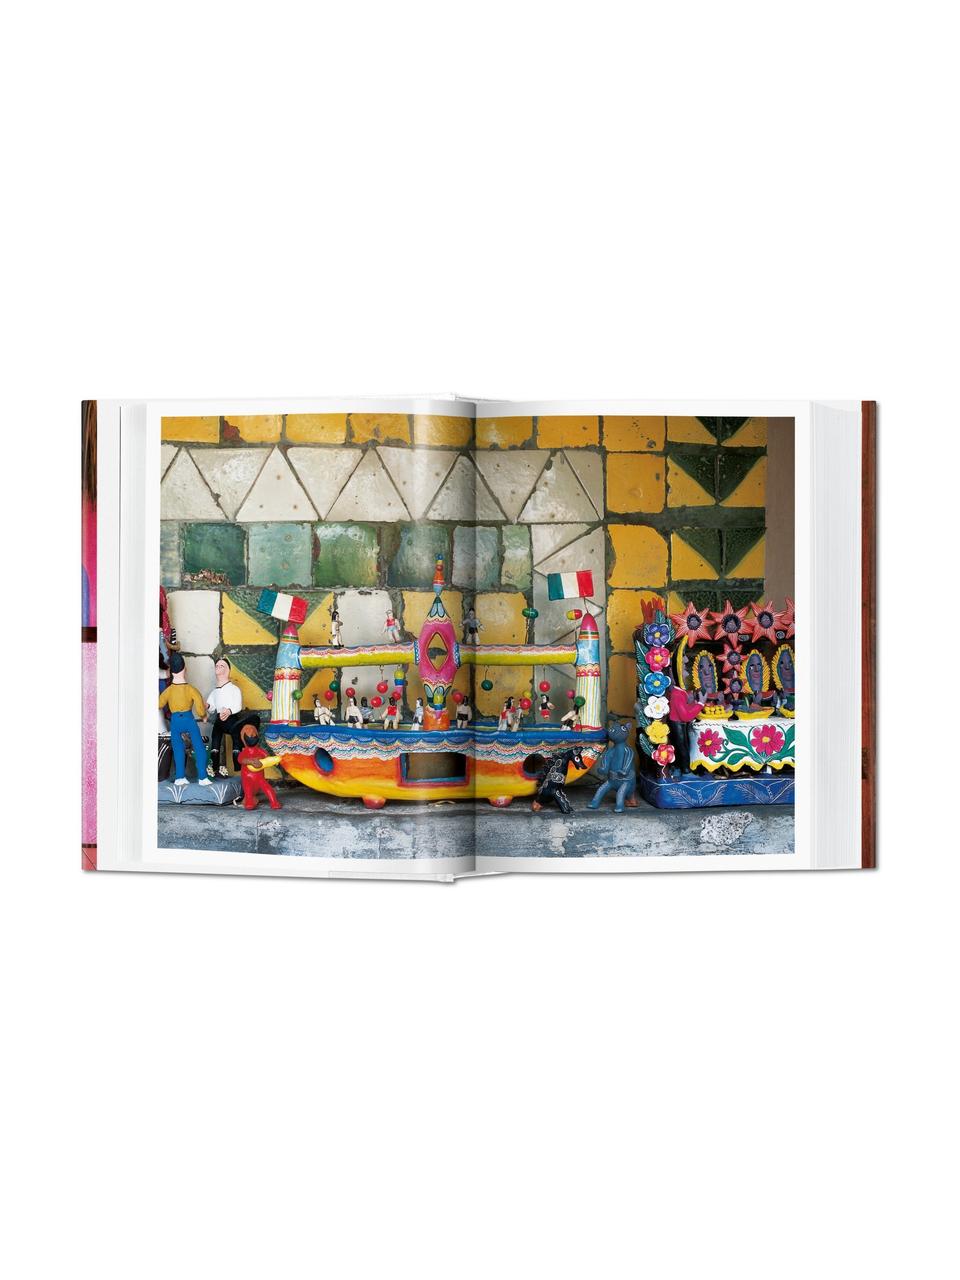 Libro ilustrado Living in Mexico, Papel, tapa dura, Rosa, multicolor, An 14 x L 20 cm